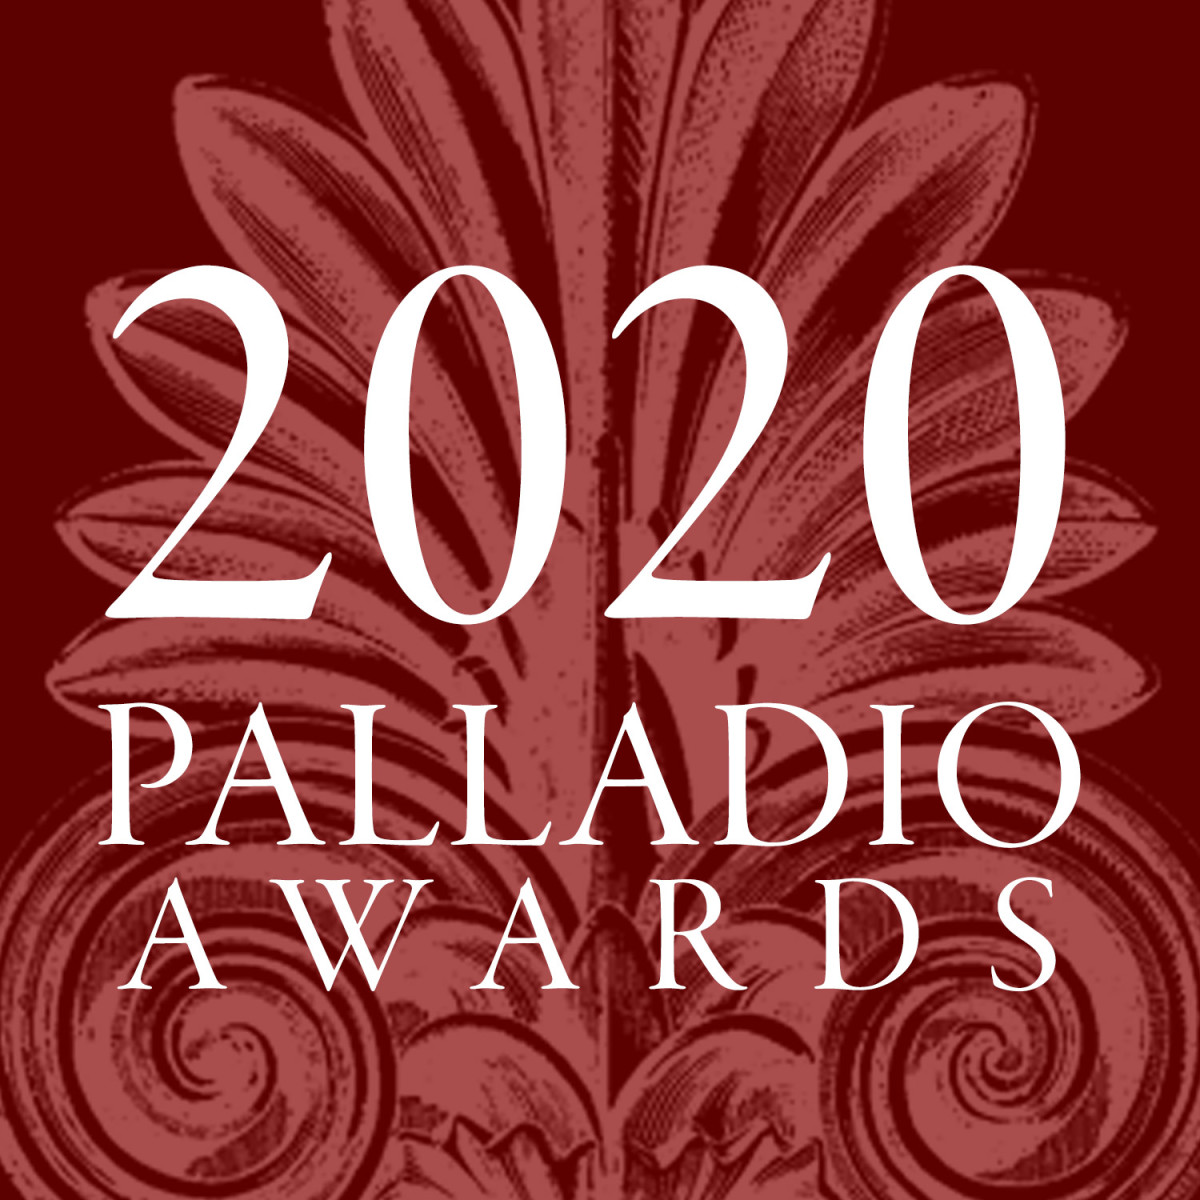 palladio-awards-2020-coverline